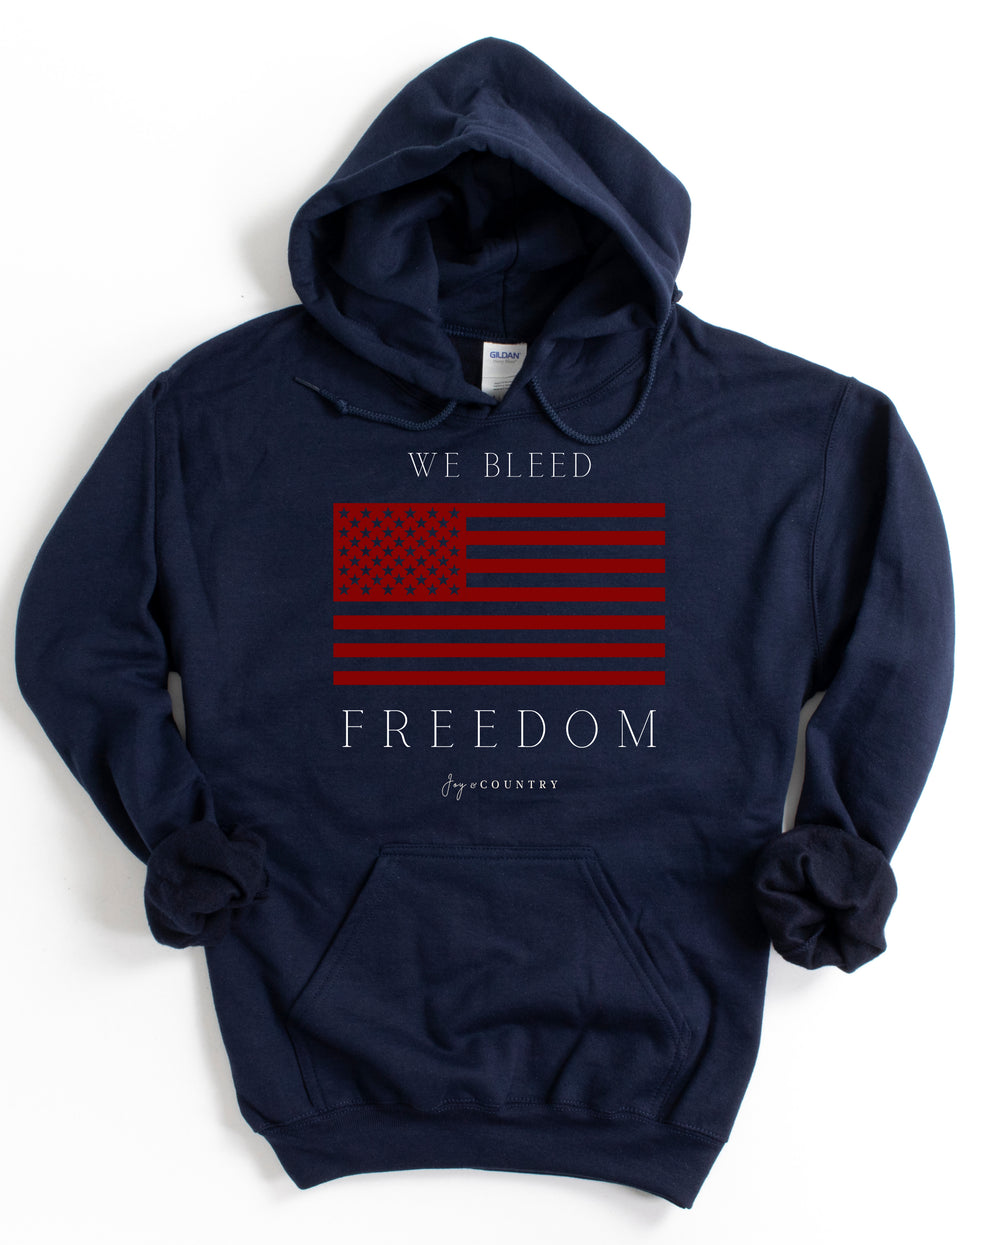 We Bleed Freedom - Unisex Hoodie Sweatshirt - Joy & Country